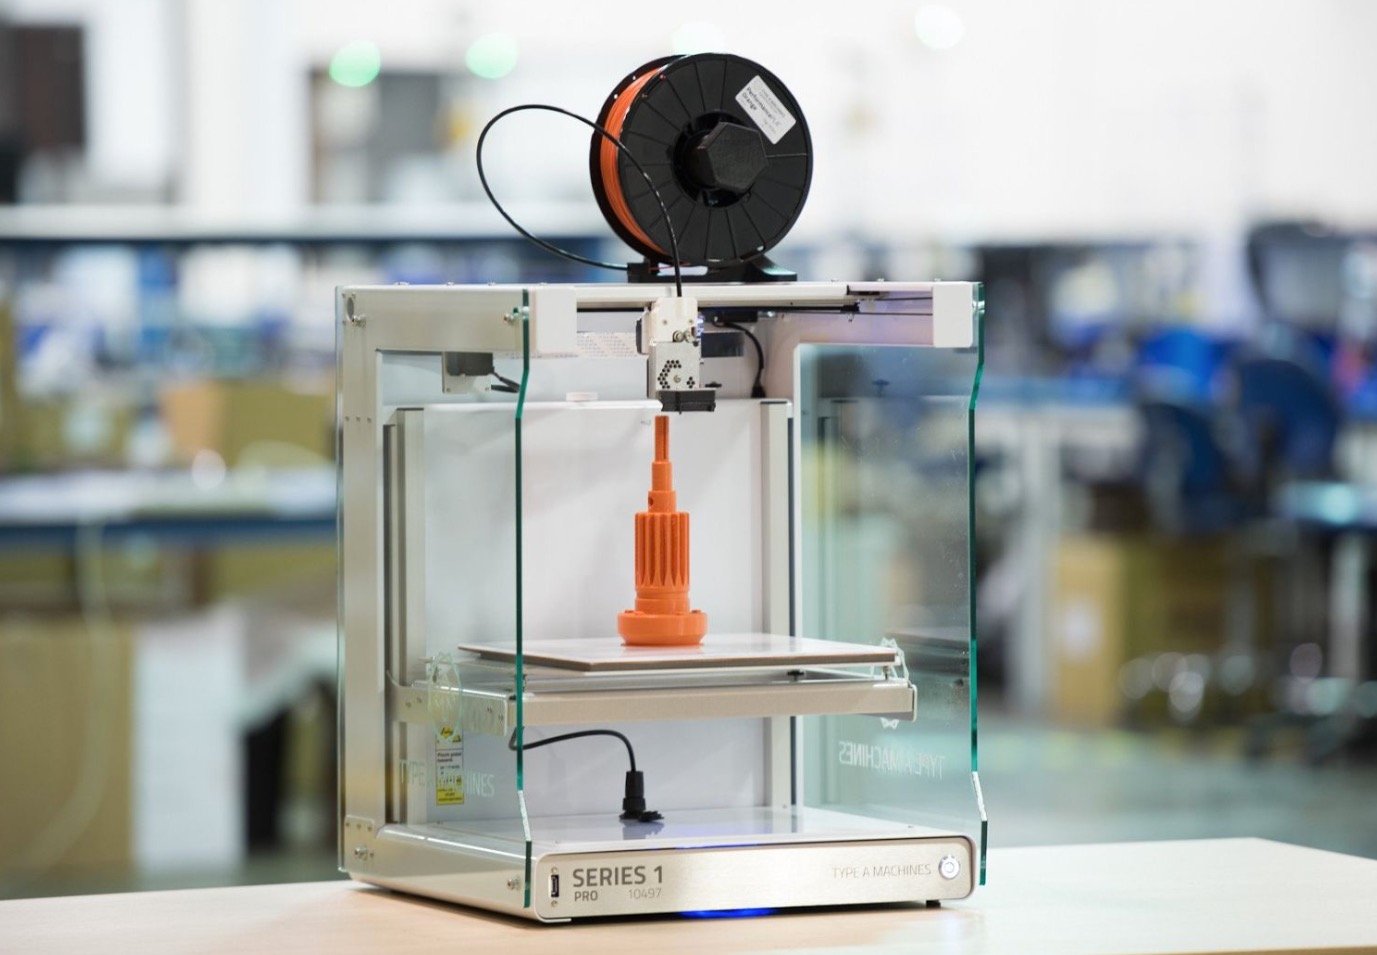  Type A Machines' Series 1 Pro desktop 3D printer 